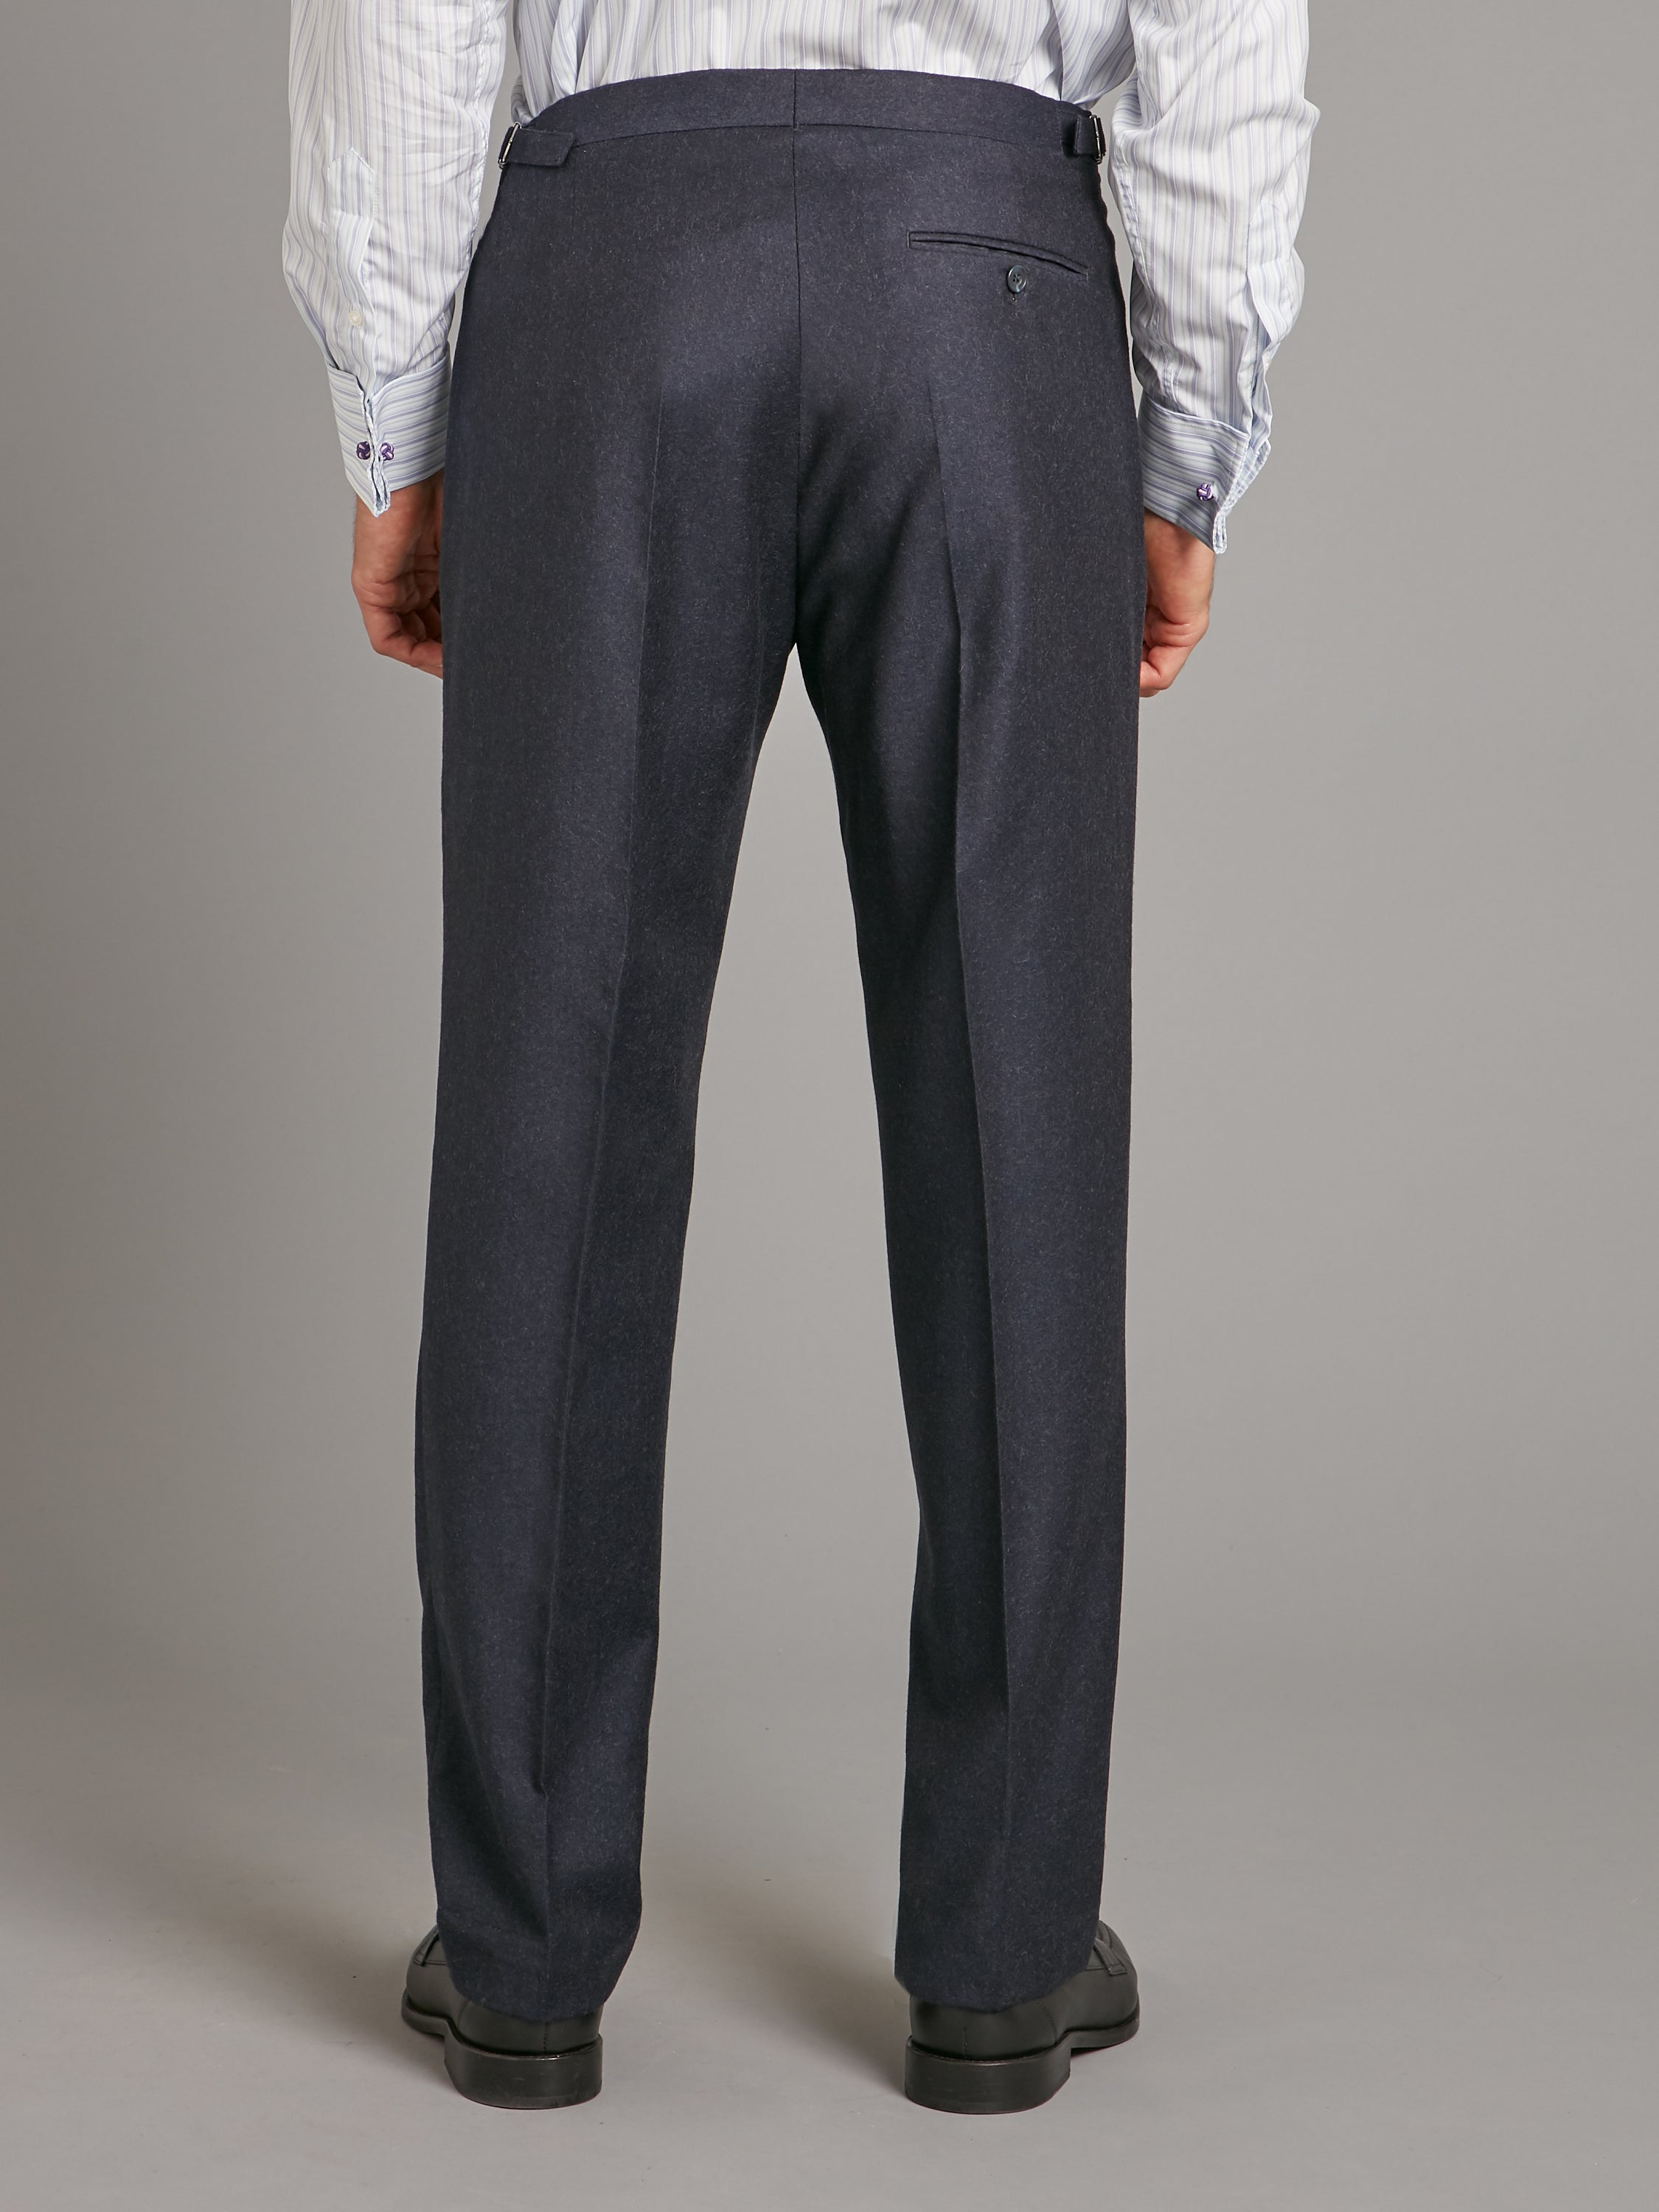 Shop Ymc Men's Wool Trousers up to 60% Off | DealDoodle